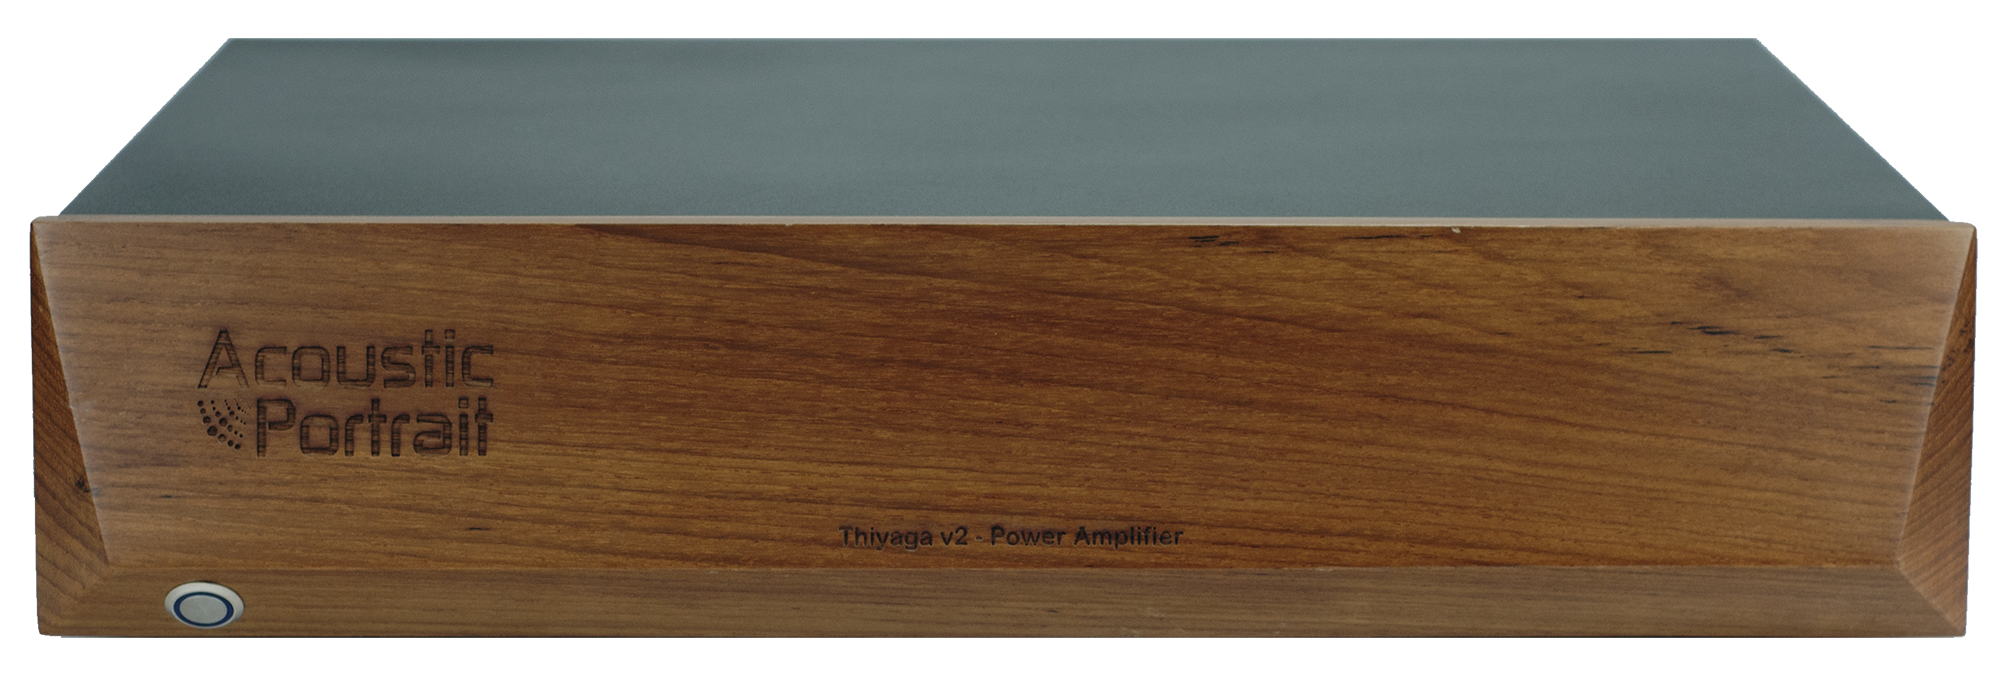 Thiyaga Power Amplifier Front